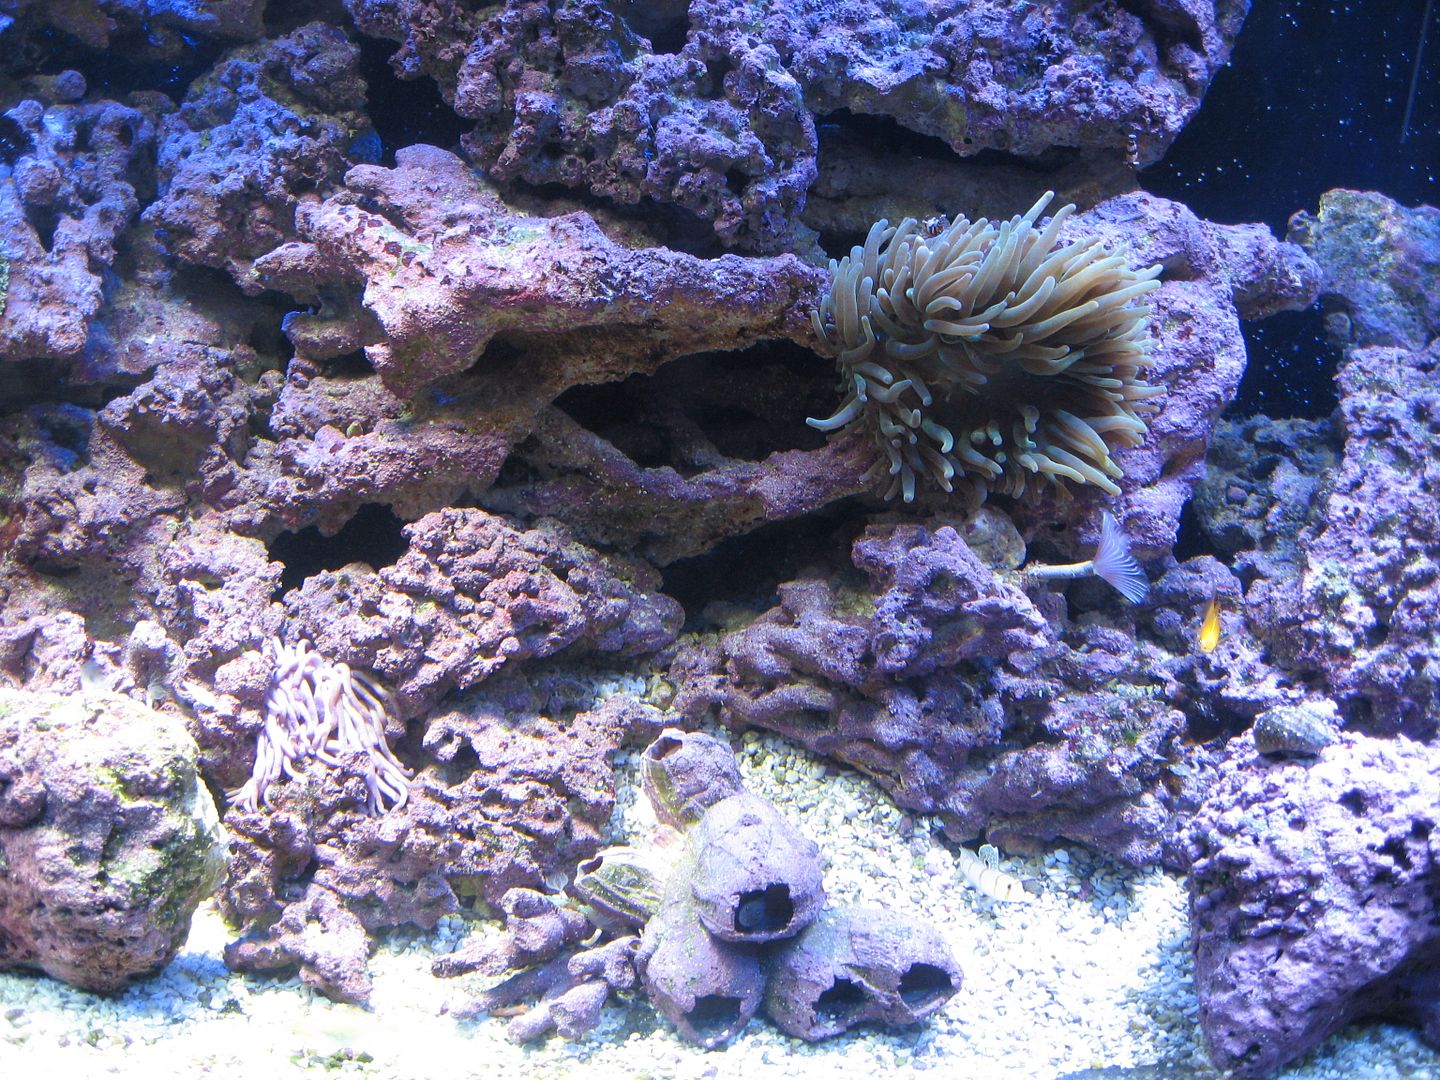 Aquarium_TankRight_10MAY2012.jpg